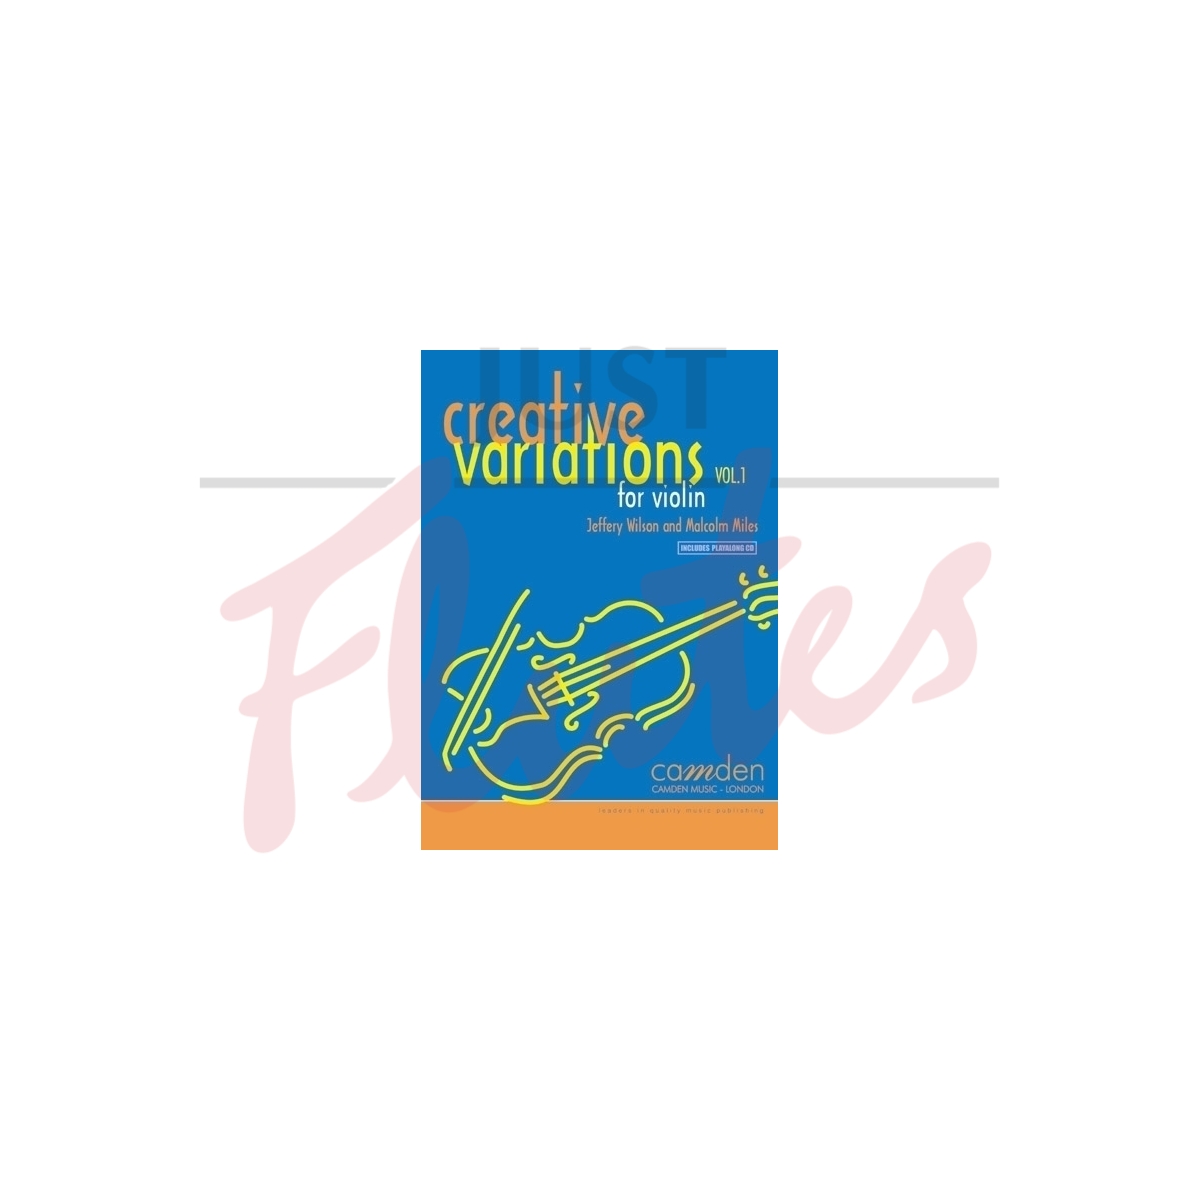 Creative Variations [Violin] Vol 1